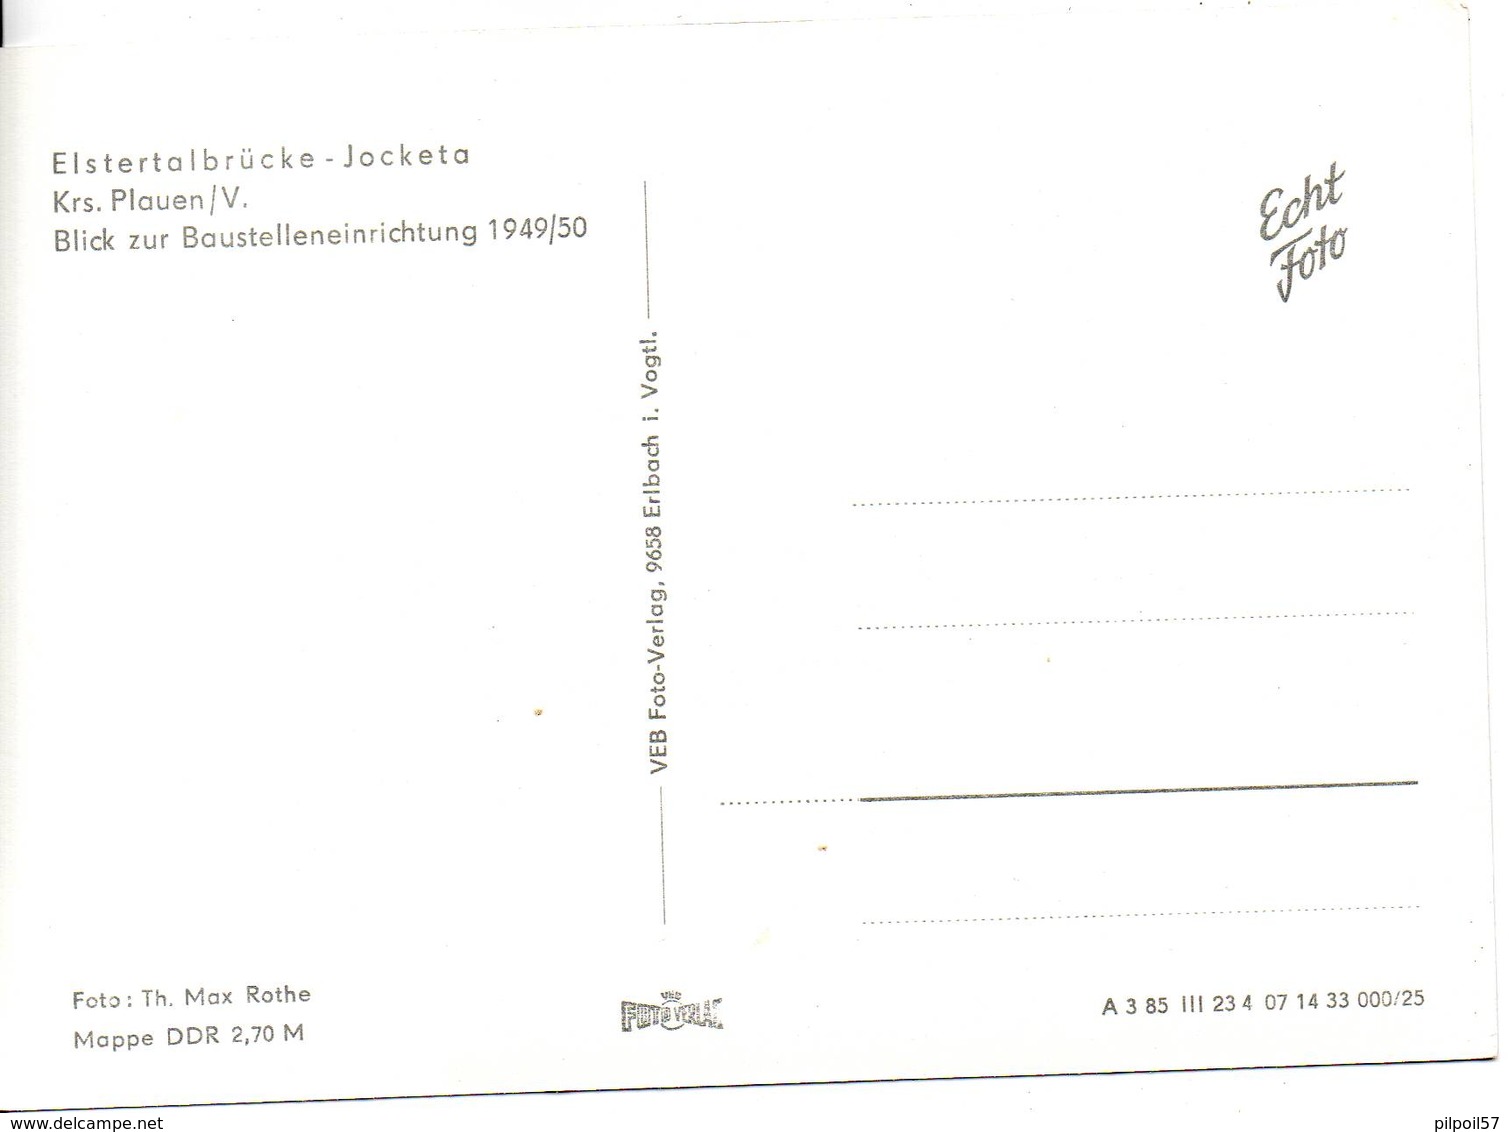 ALLEMAGNE - ELSTERTALBRÜCKE - JOCKETA - Blick Zur Baustelleneinrichtung 1949/50 - Format 10X14,4 - (reproduction) - Poehl